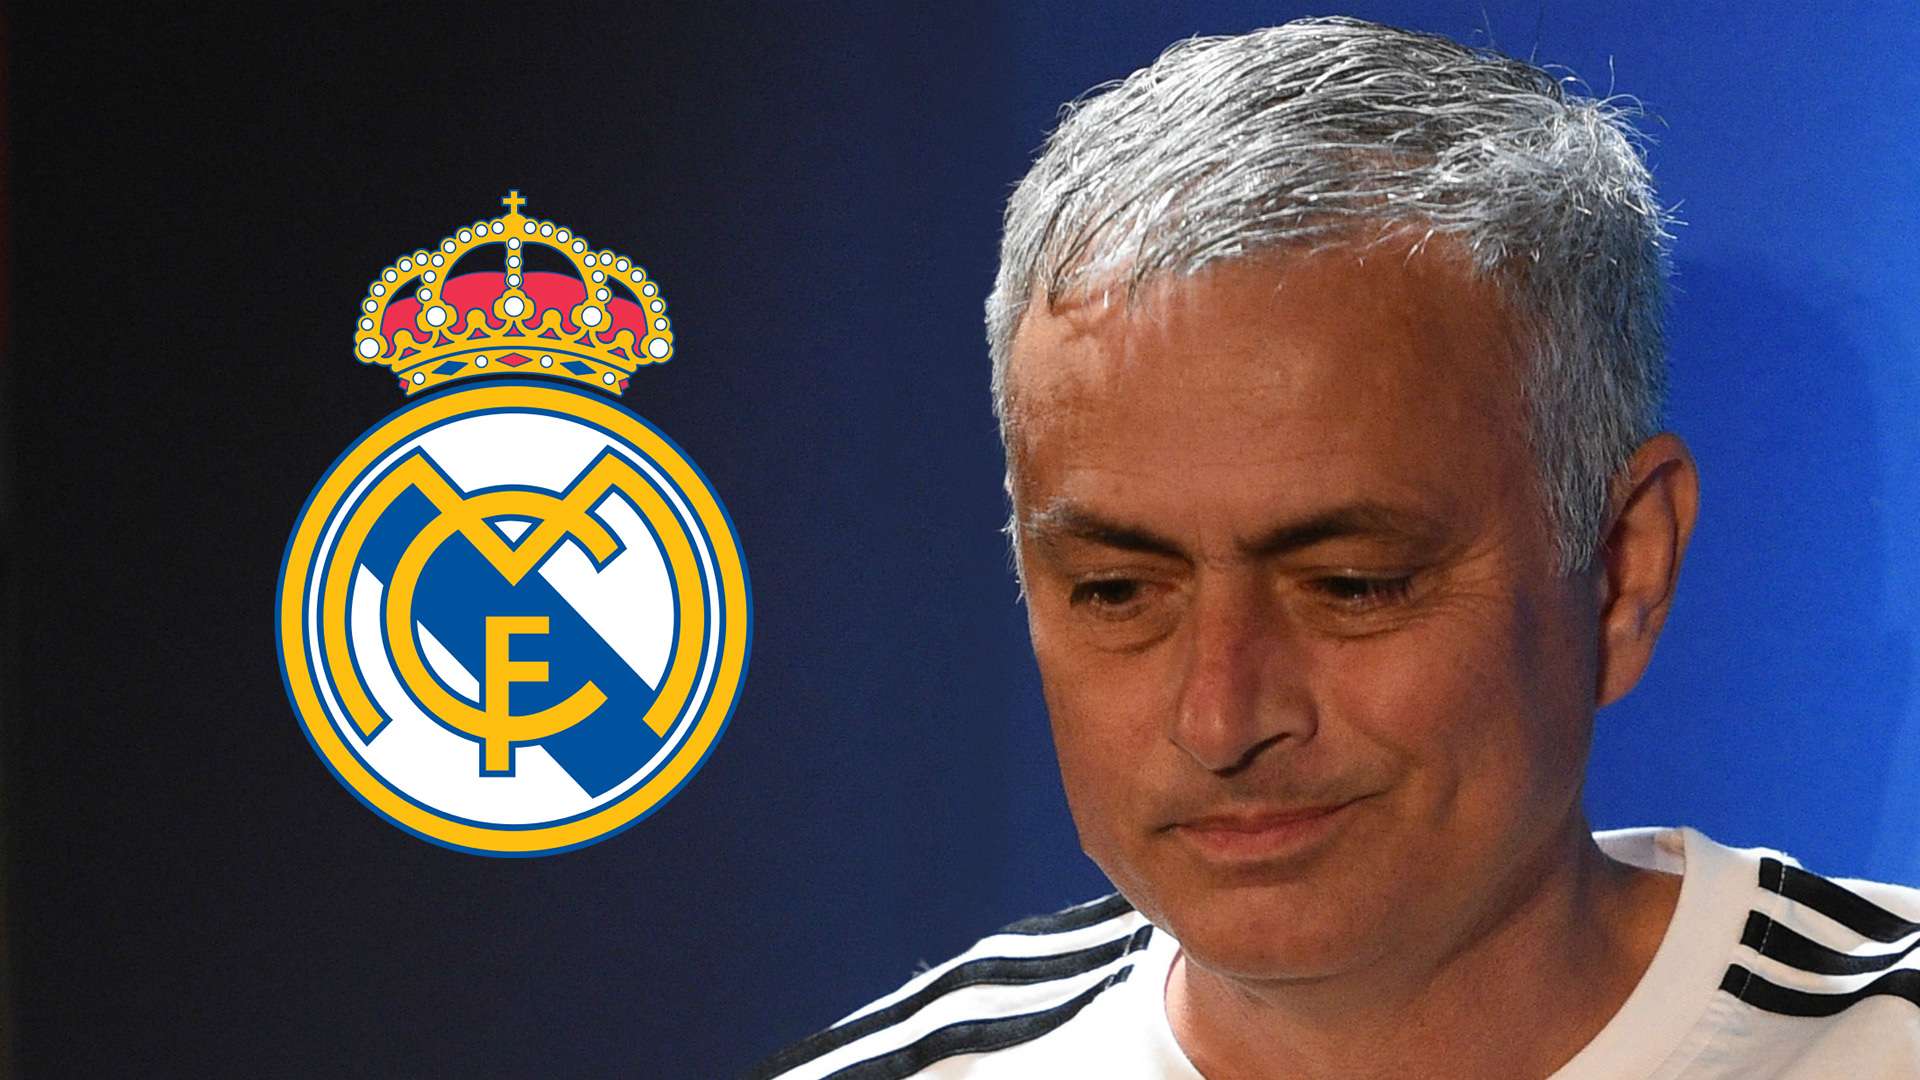 Jose Mourinho Real Madrid